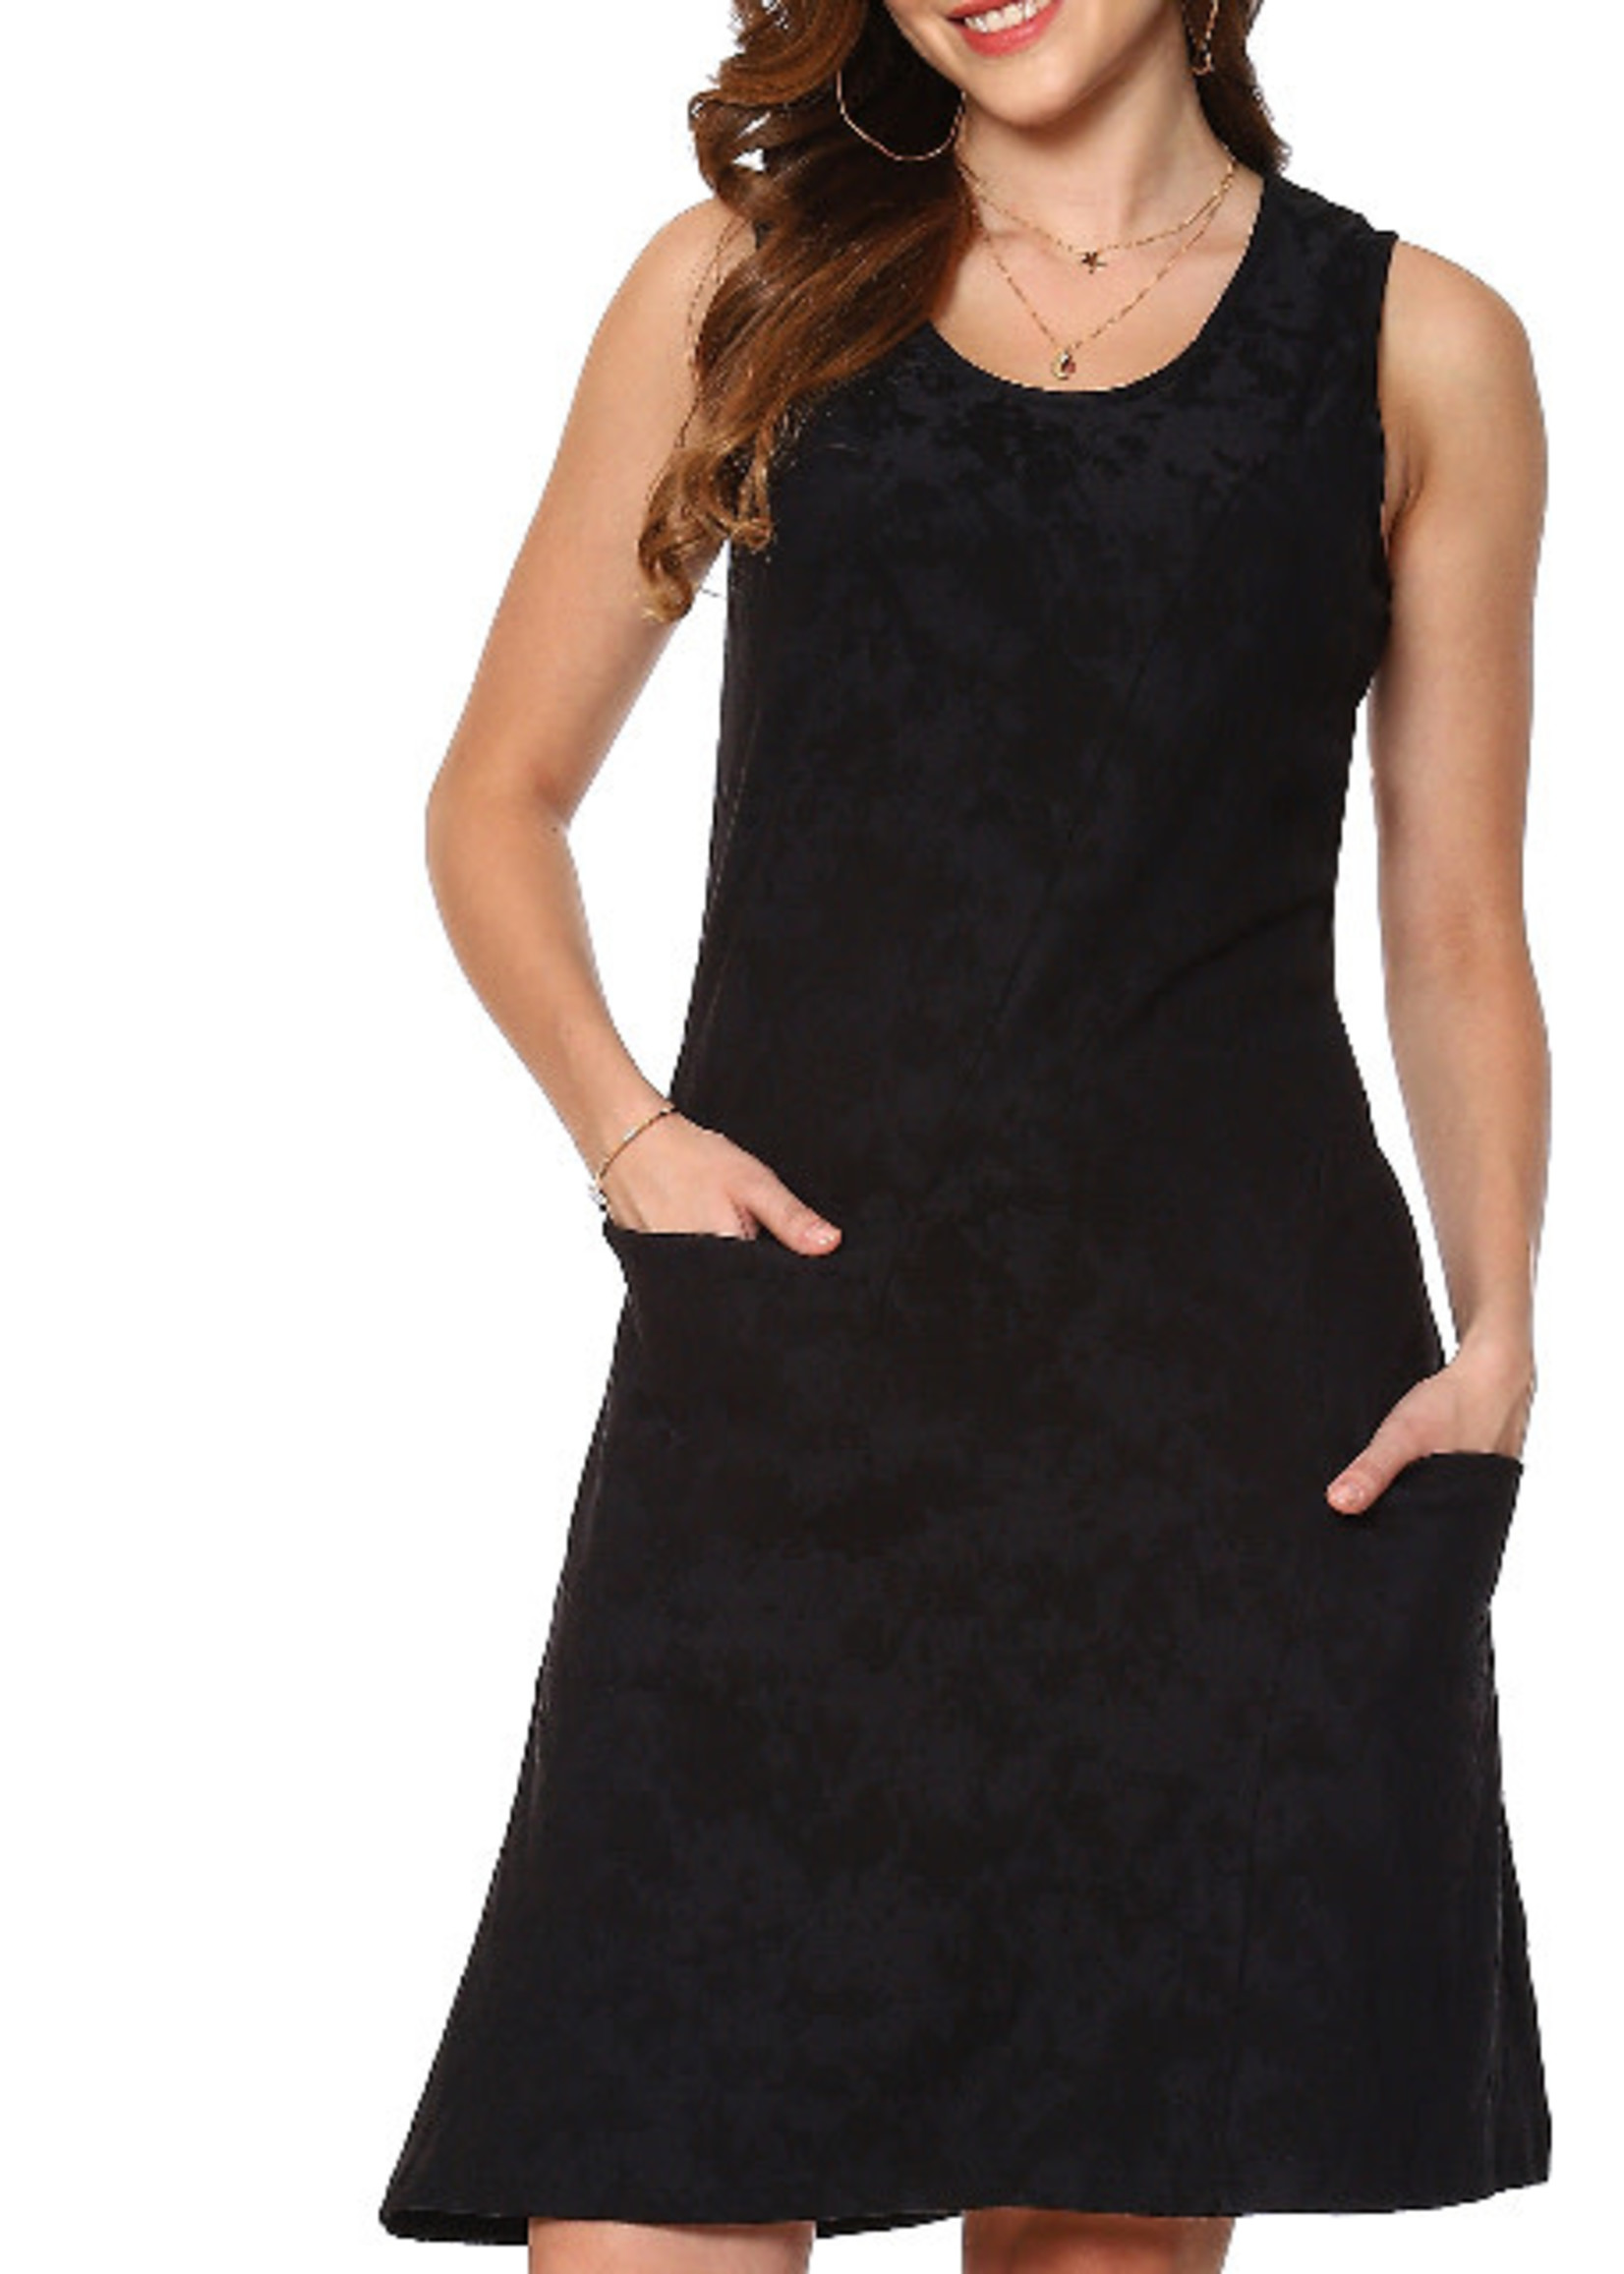 Parsley and Sage Black Textured Sleeveless Black Dress